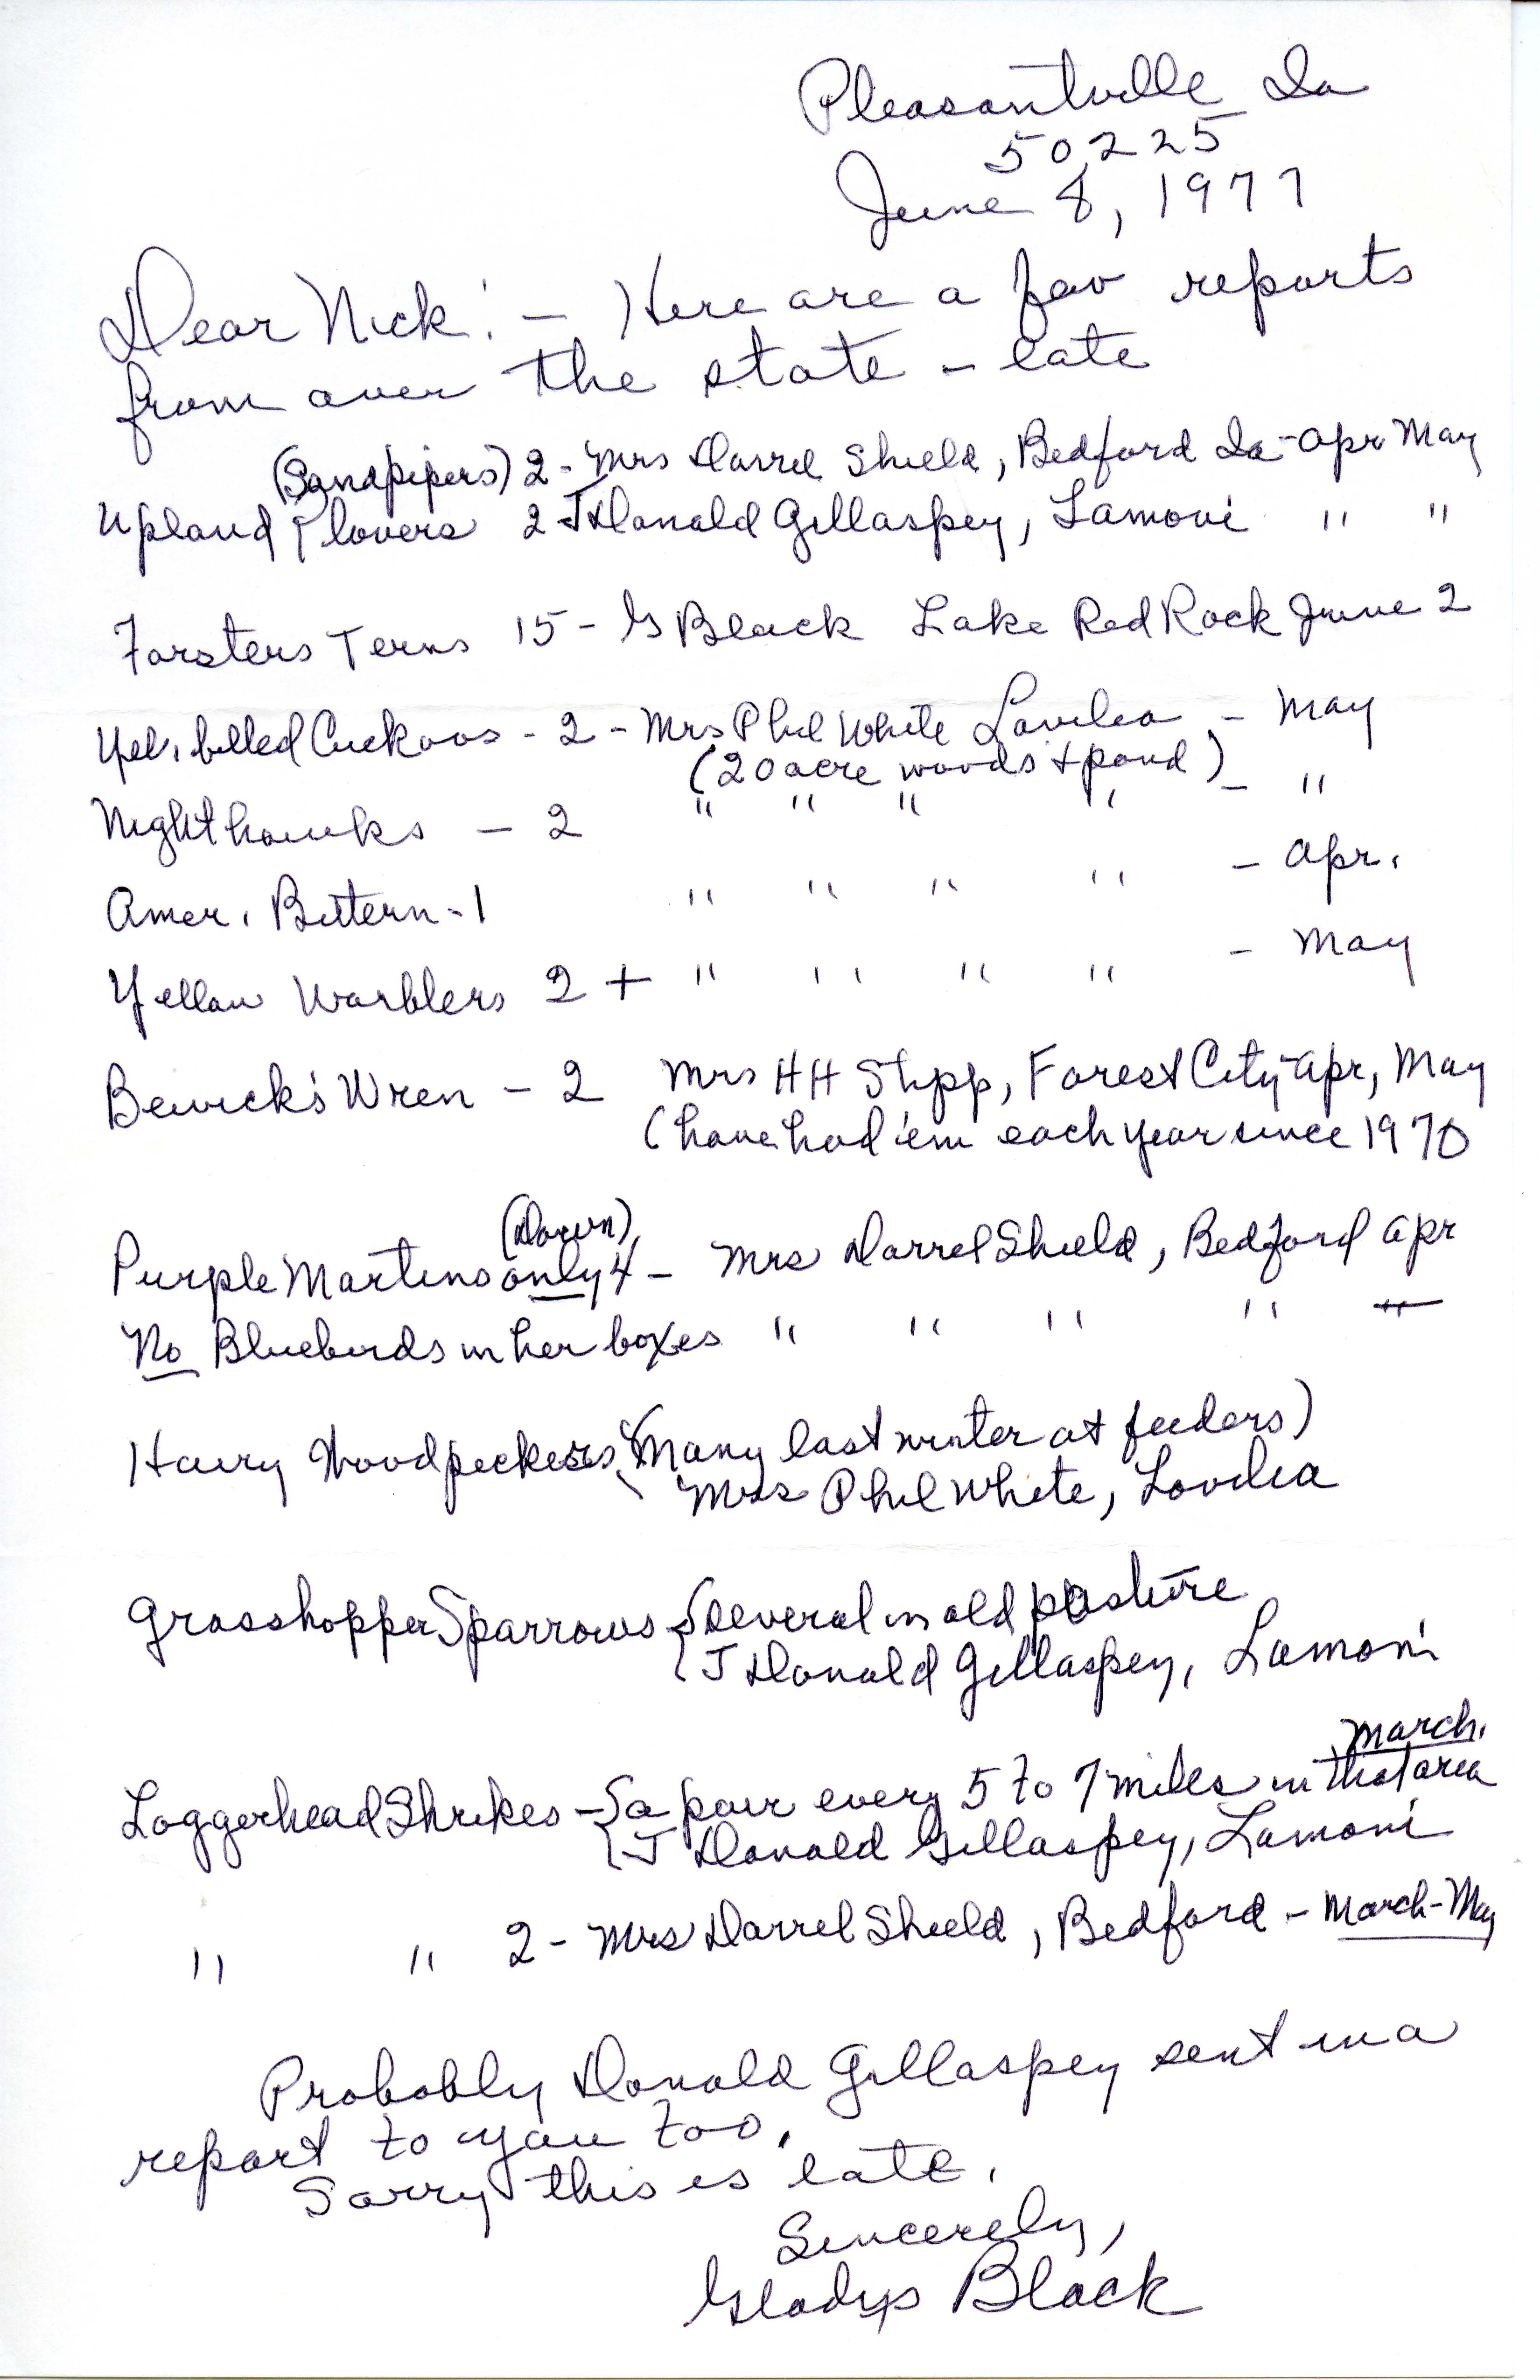 Gladys Black letter to Nicholas S. Halmi regarding bird sighting reports, June 8, 1977